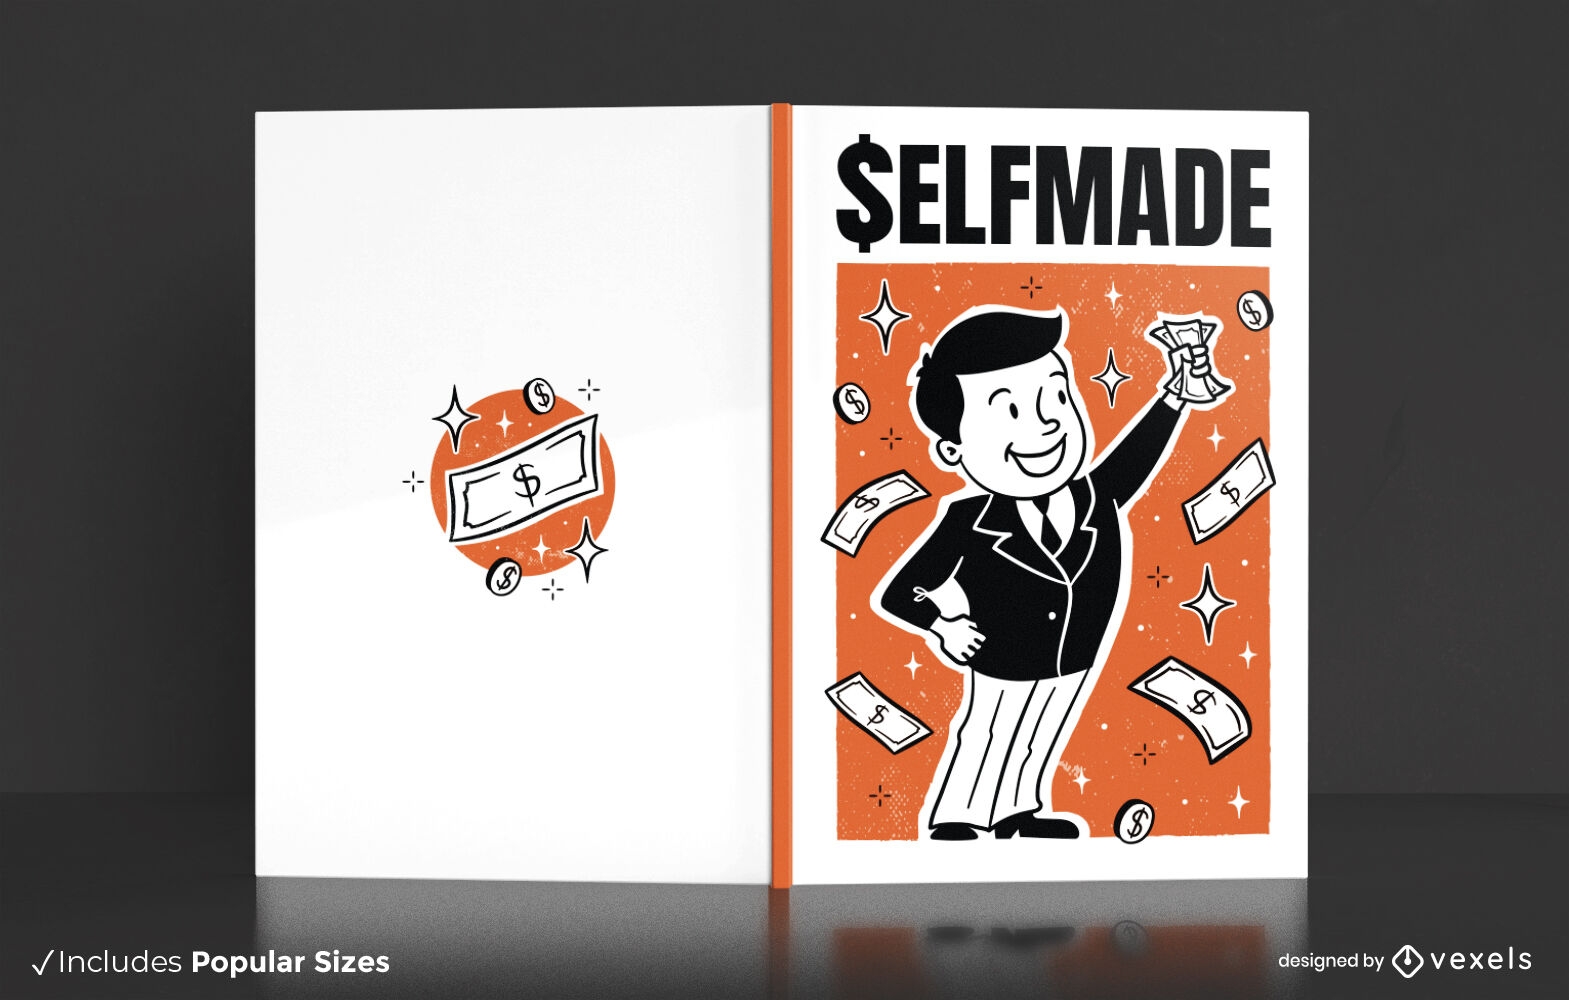 Selfmade finances book cover design